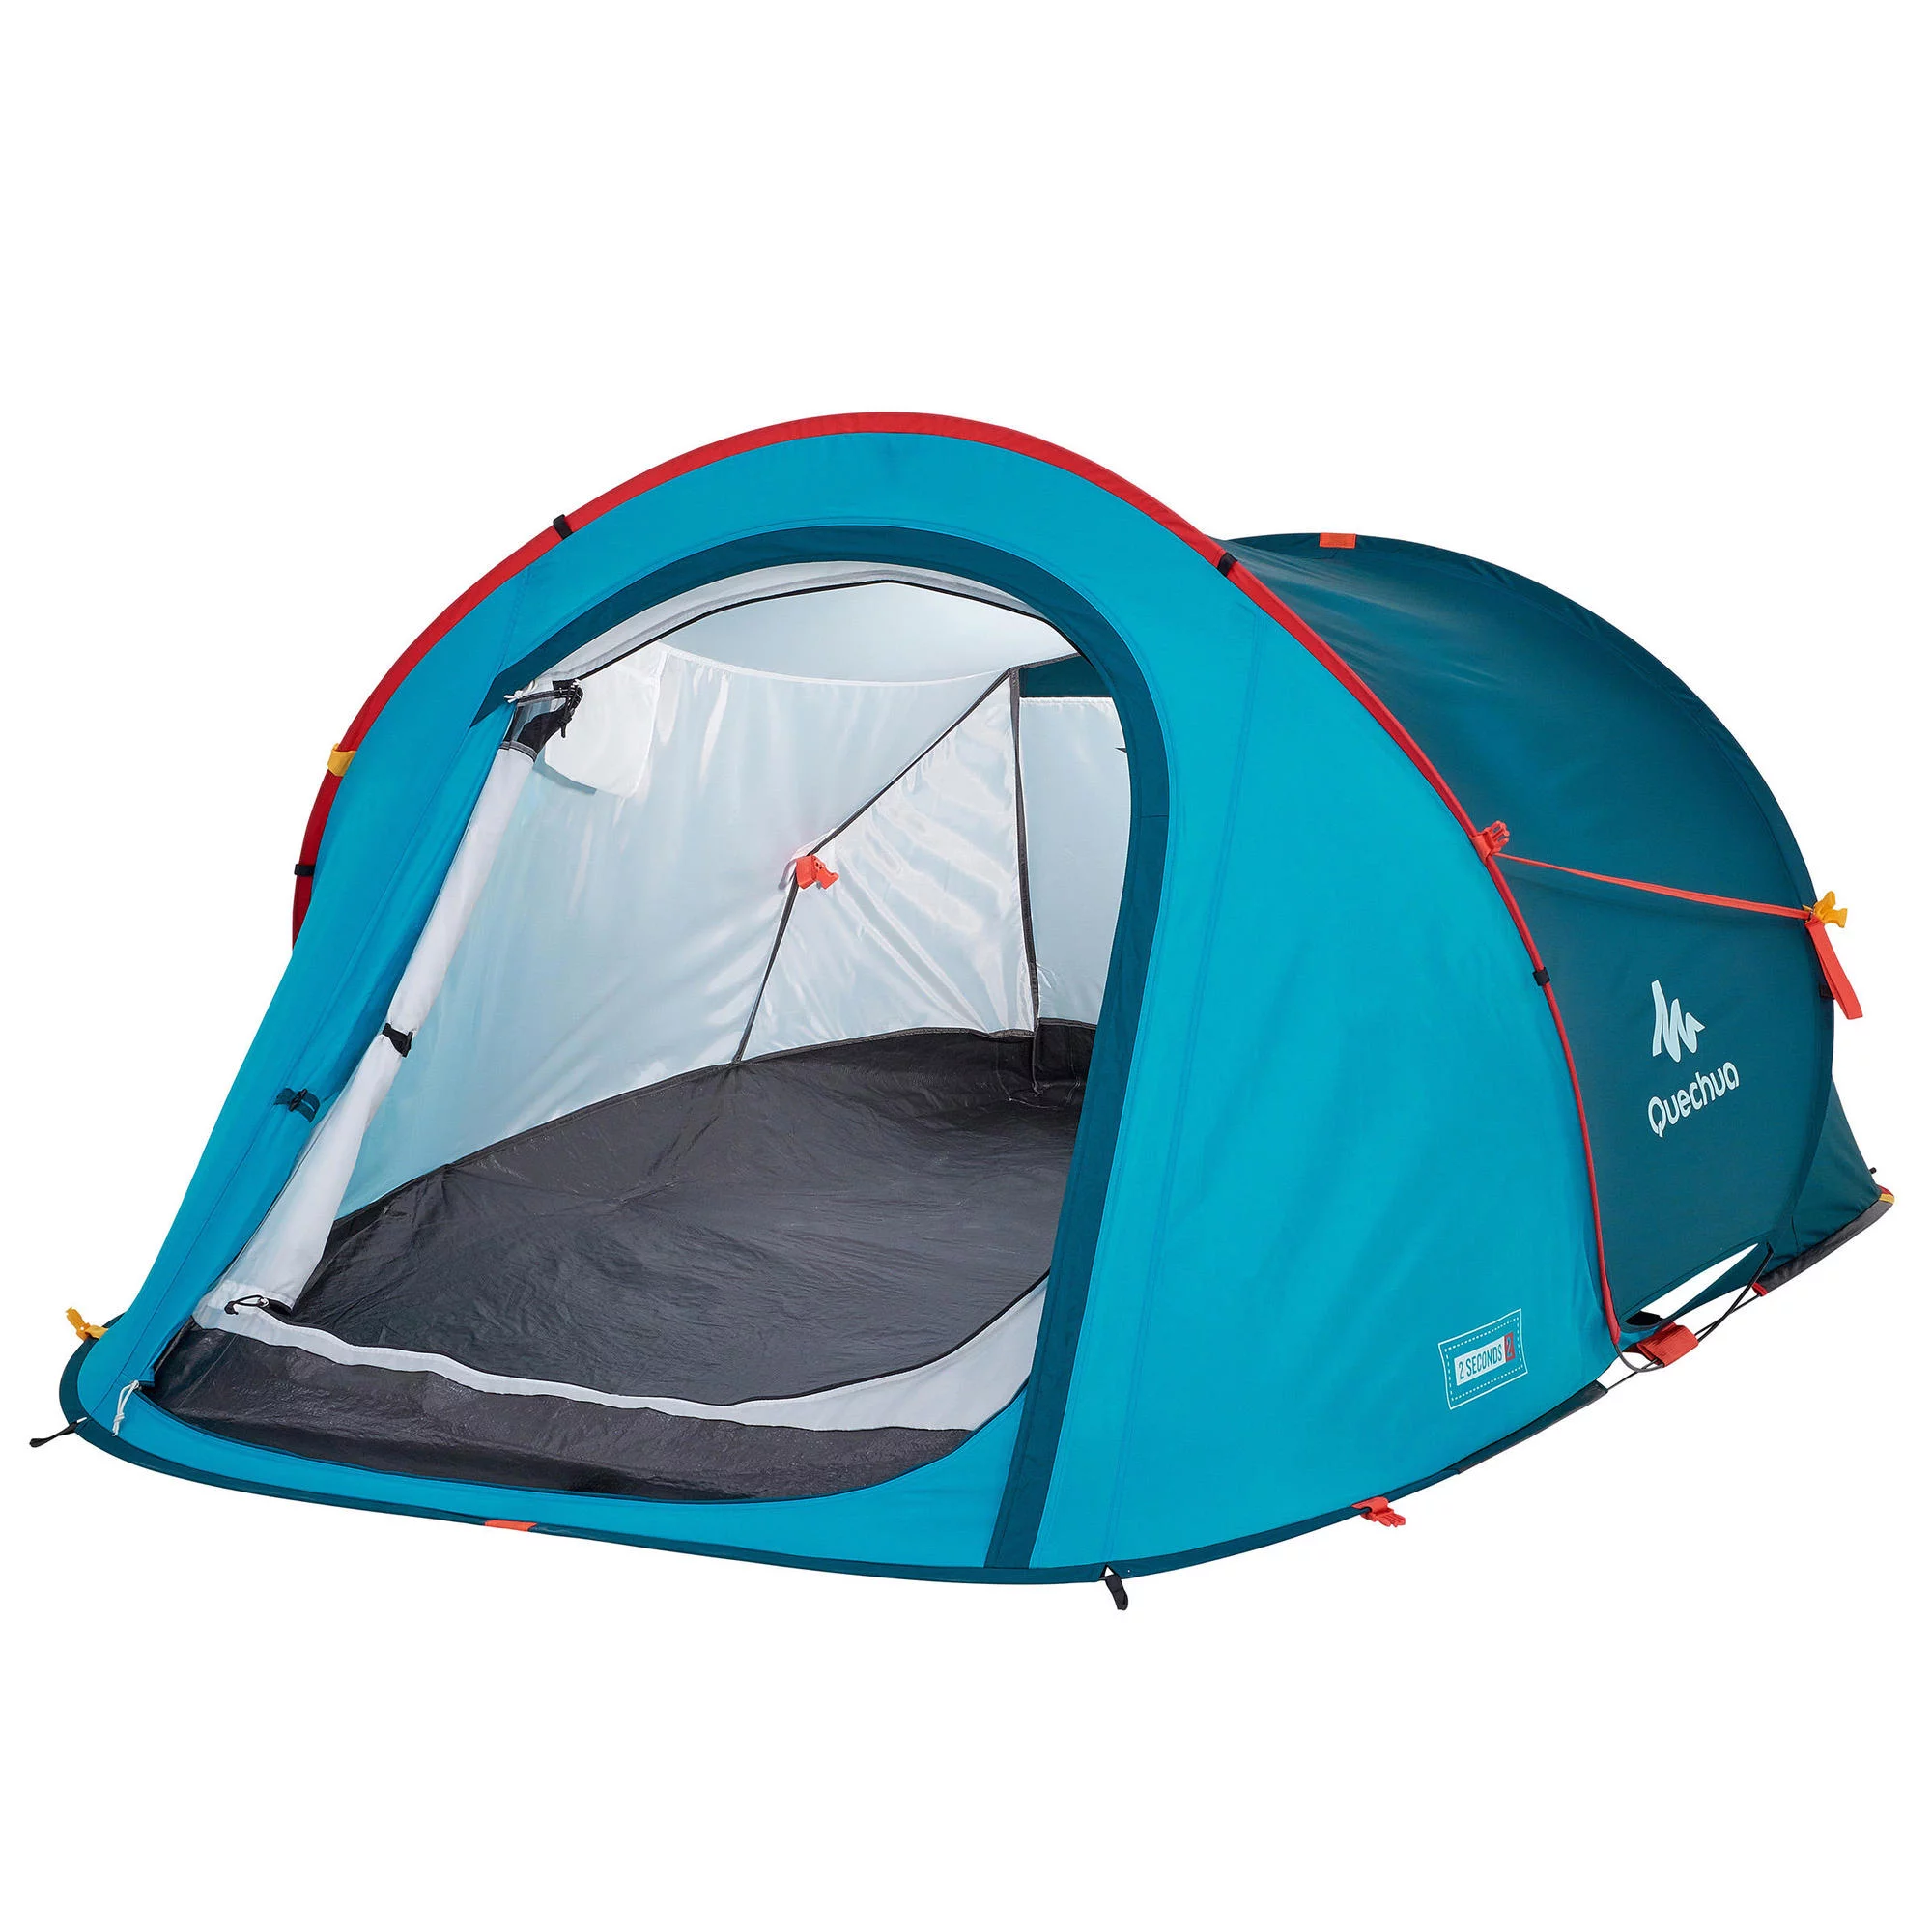 Decathlon Quechua, Instant 2 Second Pop Up, Portable Outdoor Camping Tent, Waterproof, Windproof, 2 Person